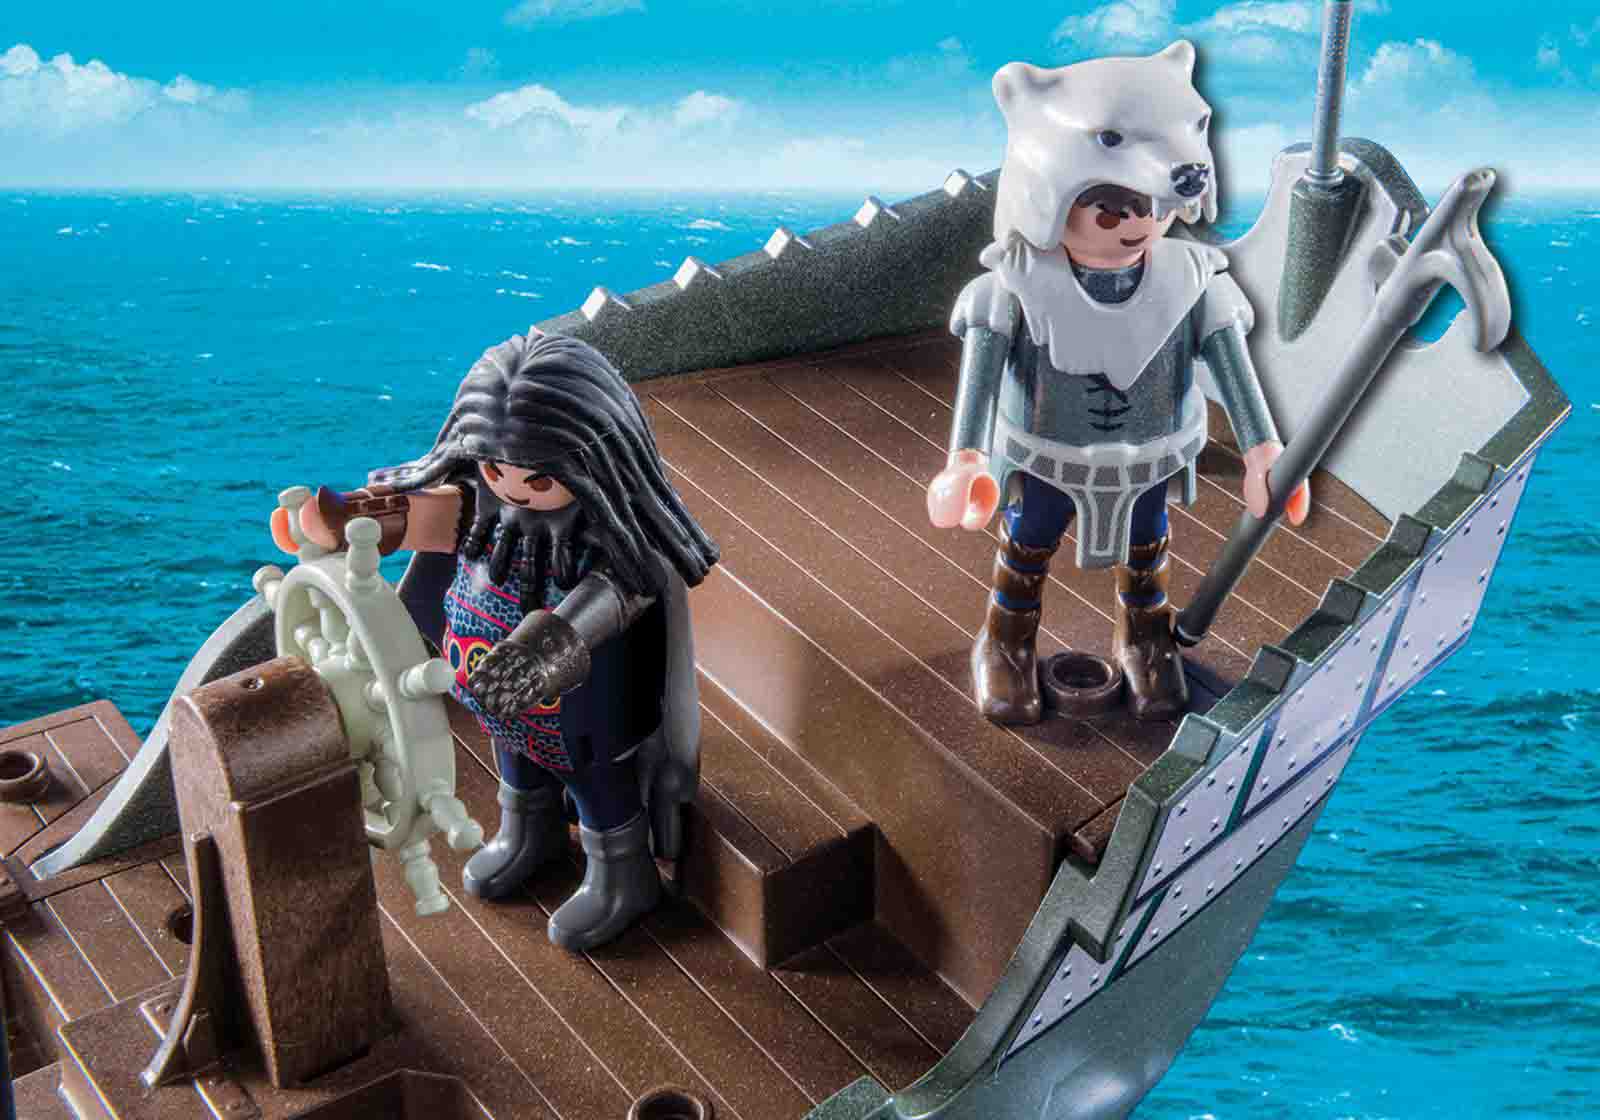 Playmobil Драконы: Драконий корабль викингов  